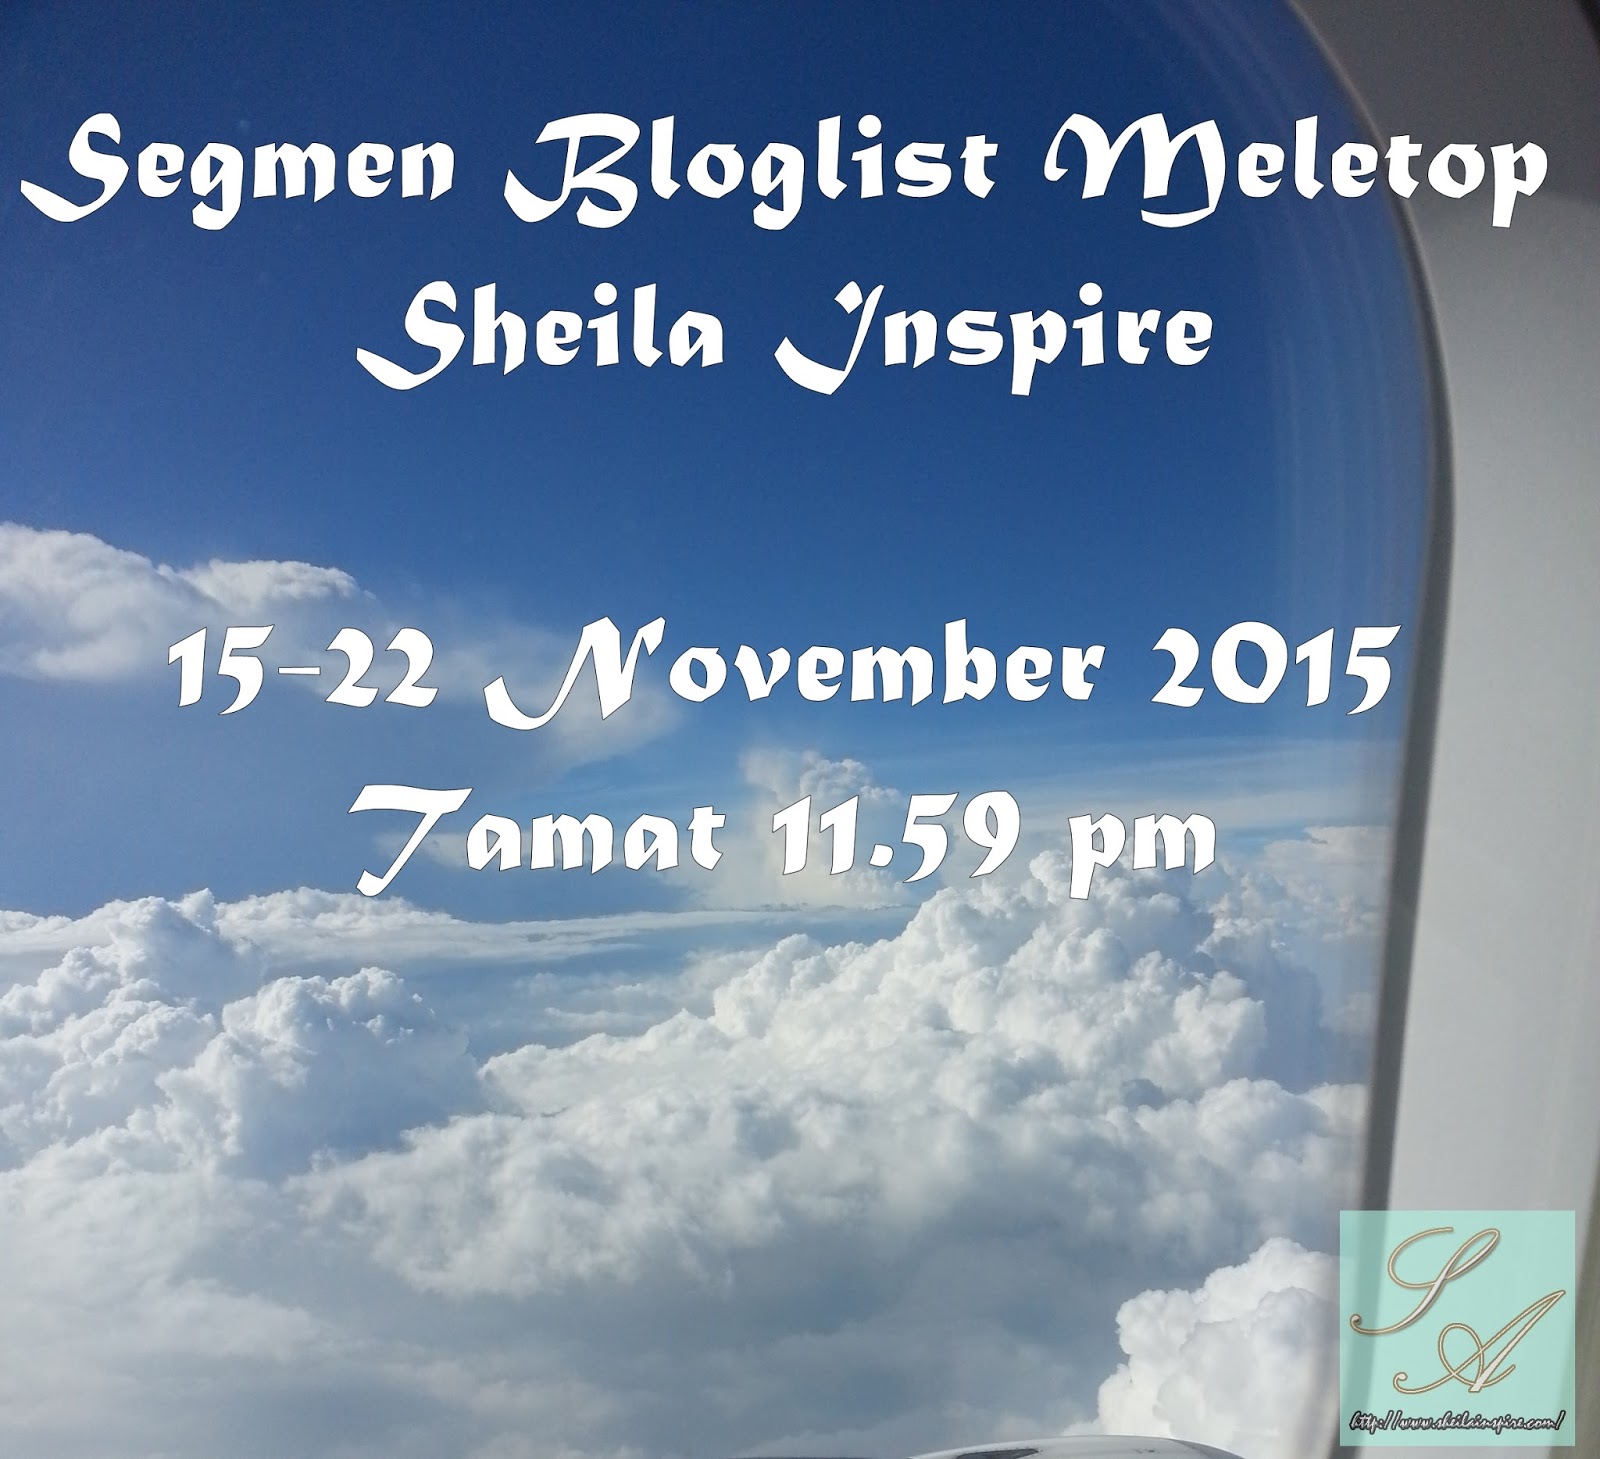 http://www.sheilainspire.com/2015/11/segmen-bloglist-meletop-sheila-inspire.html